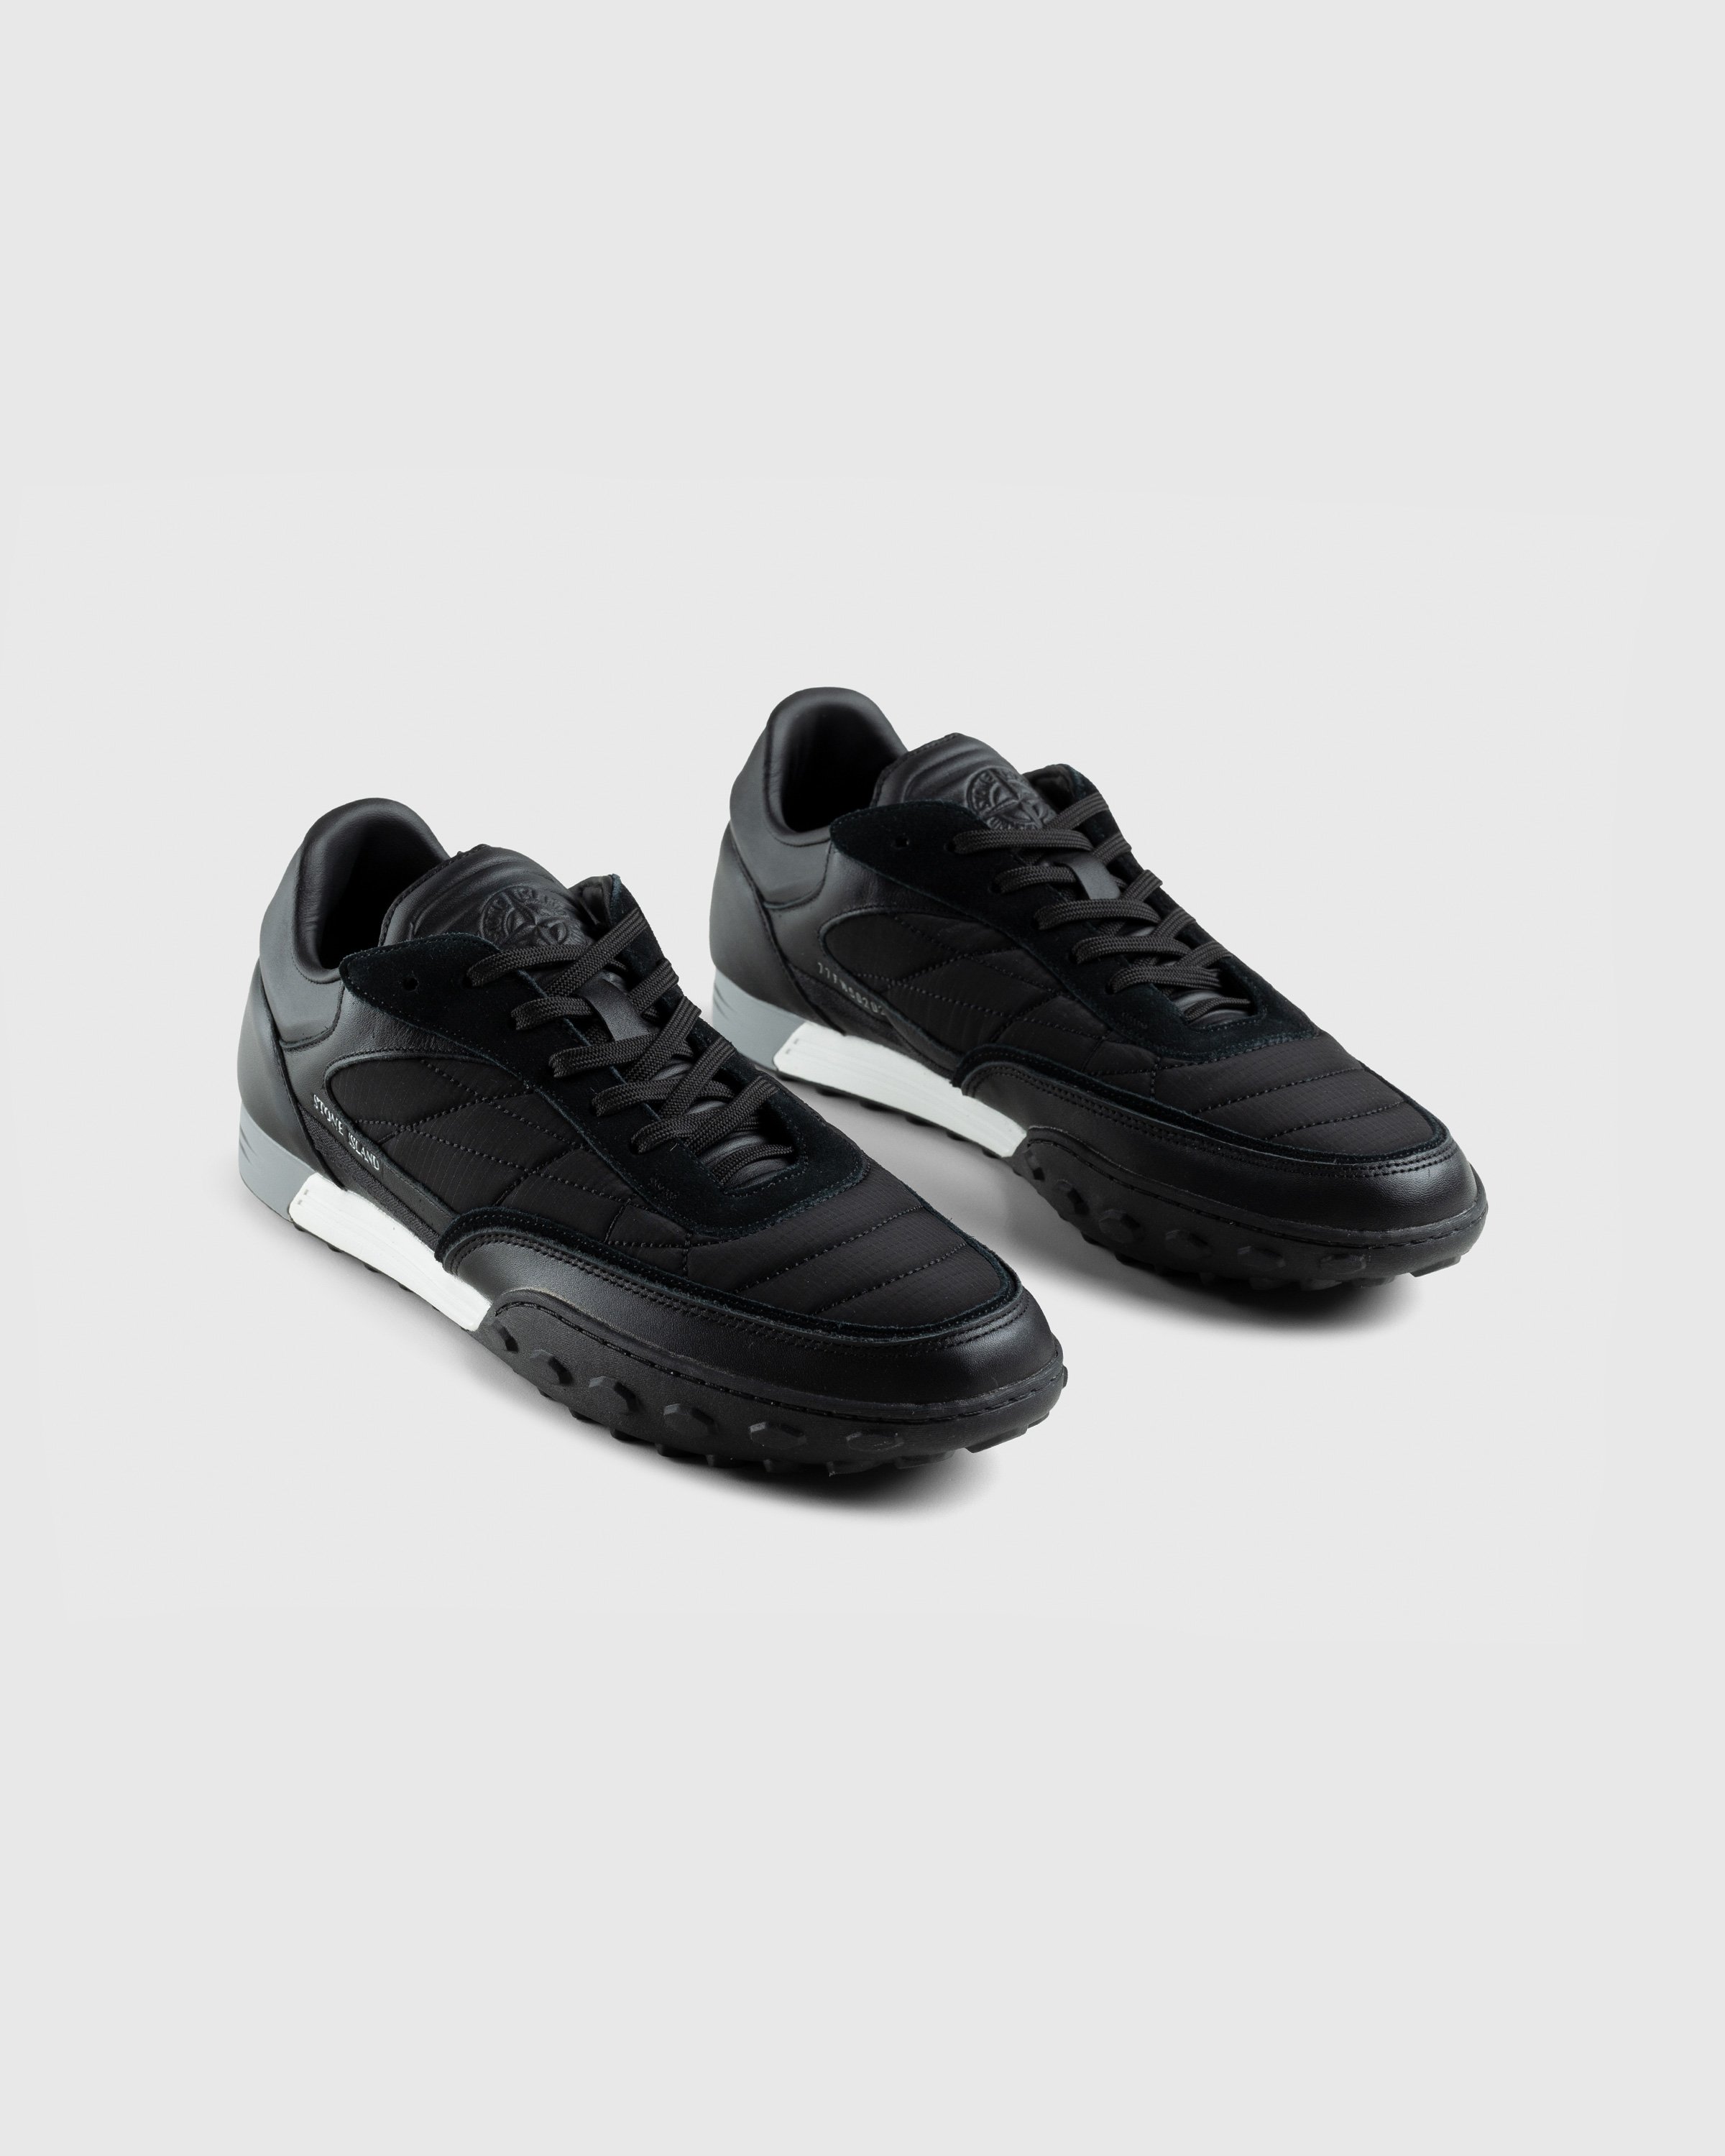 Stone Island - Football Sneaker Black - Footwear - Black - Image 3